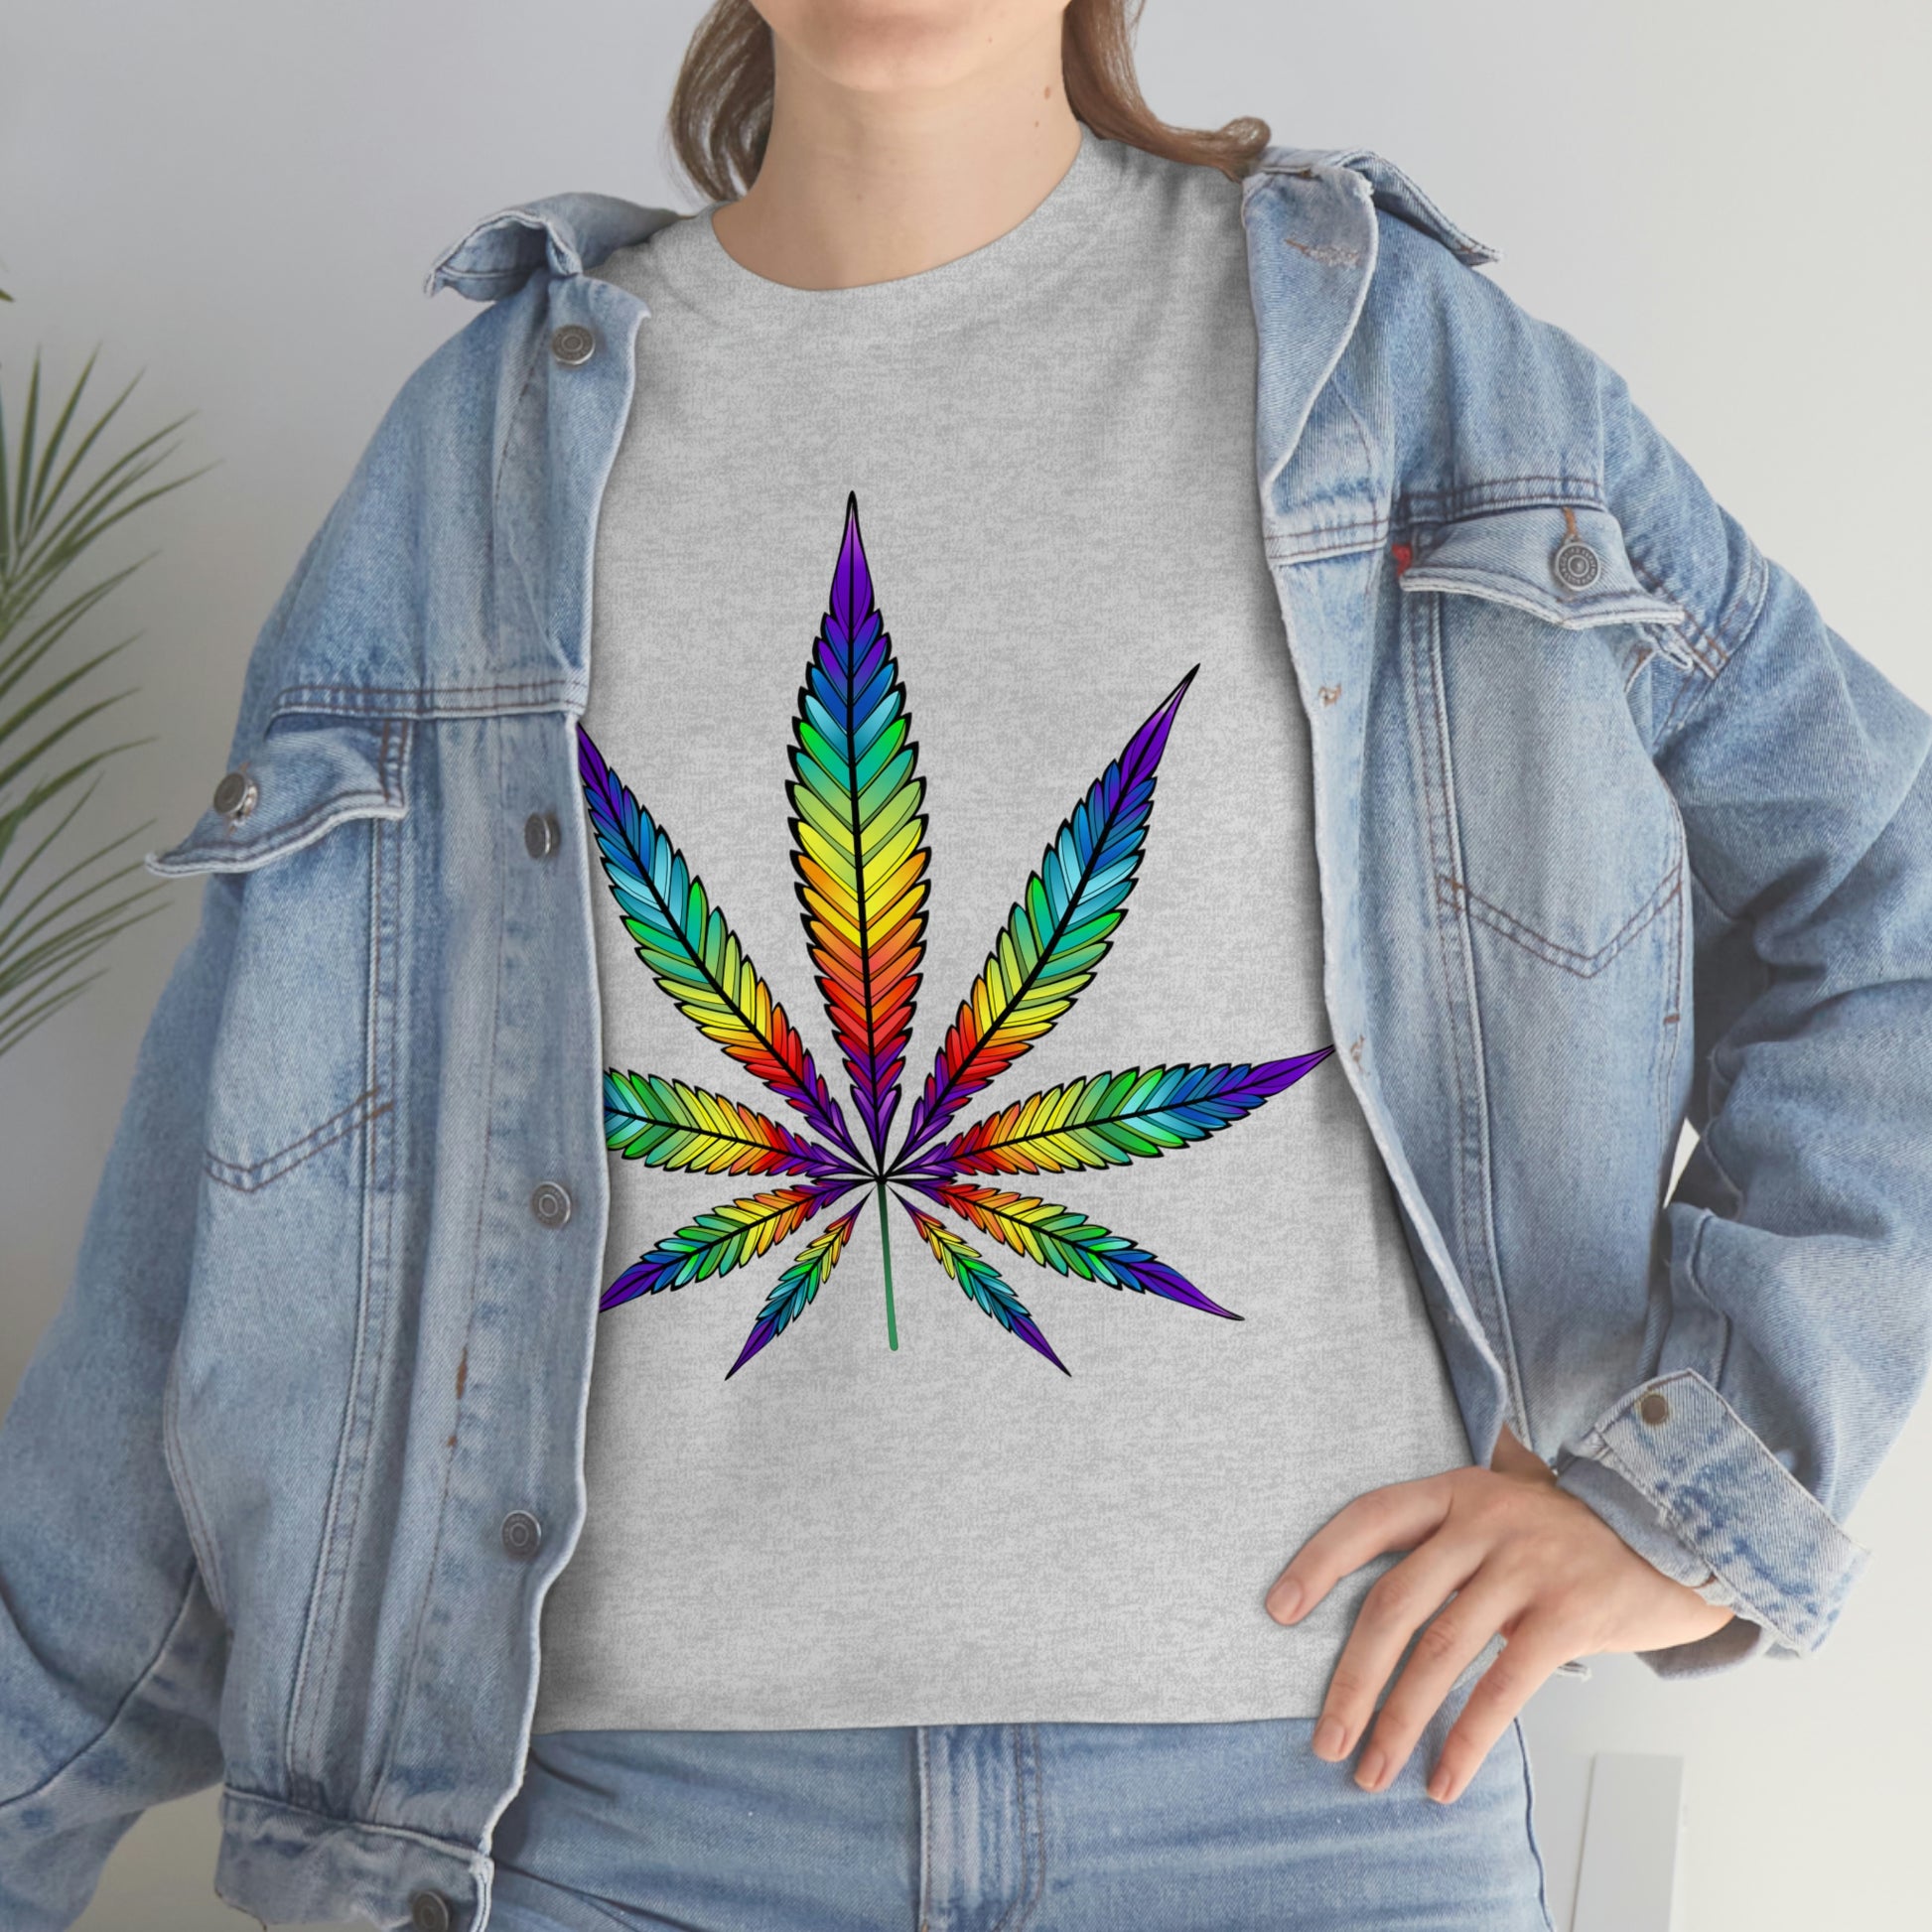 a woman wearing a Rainbow Cannabis Leaf Tee.